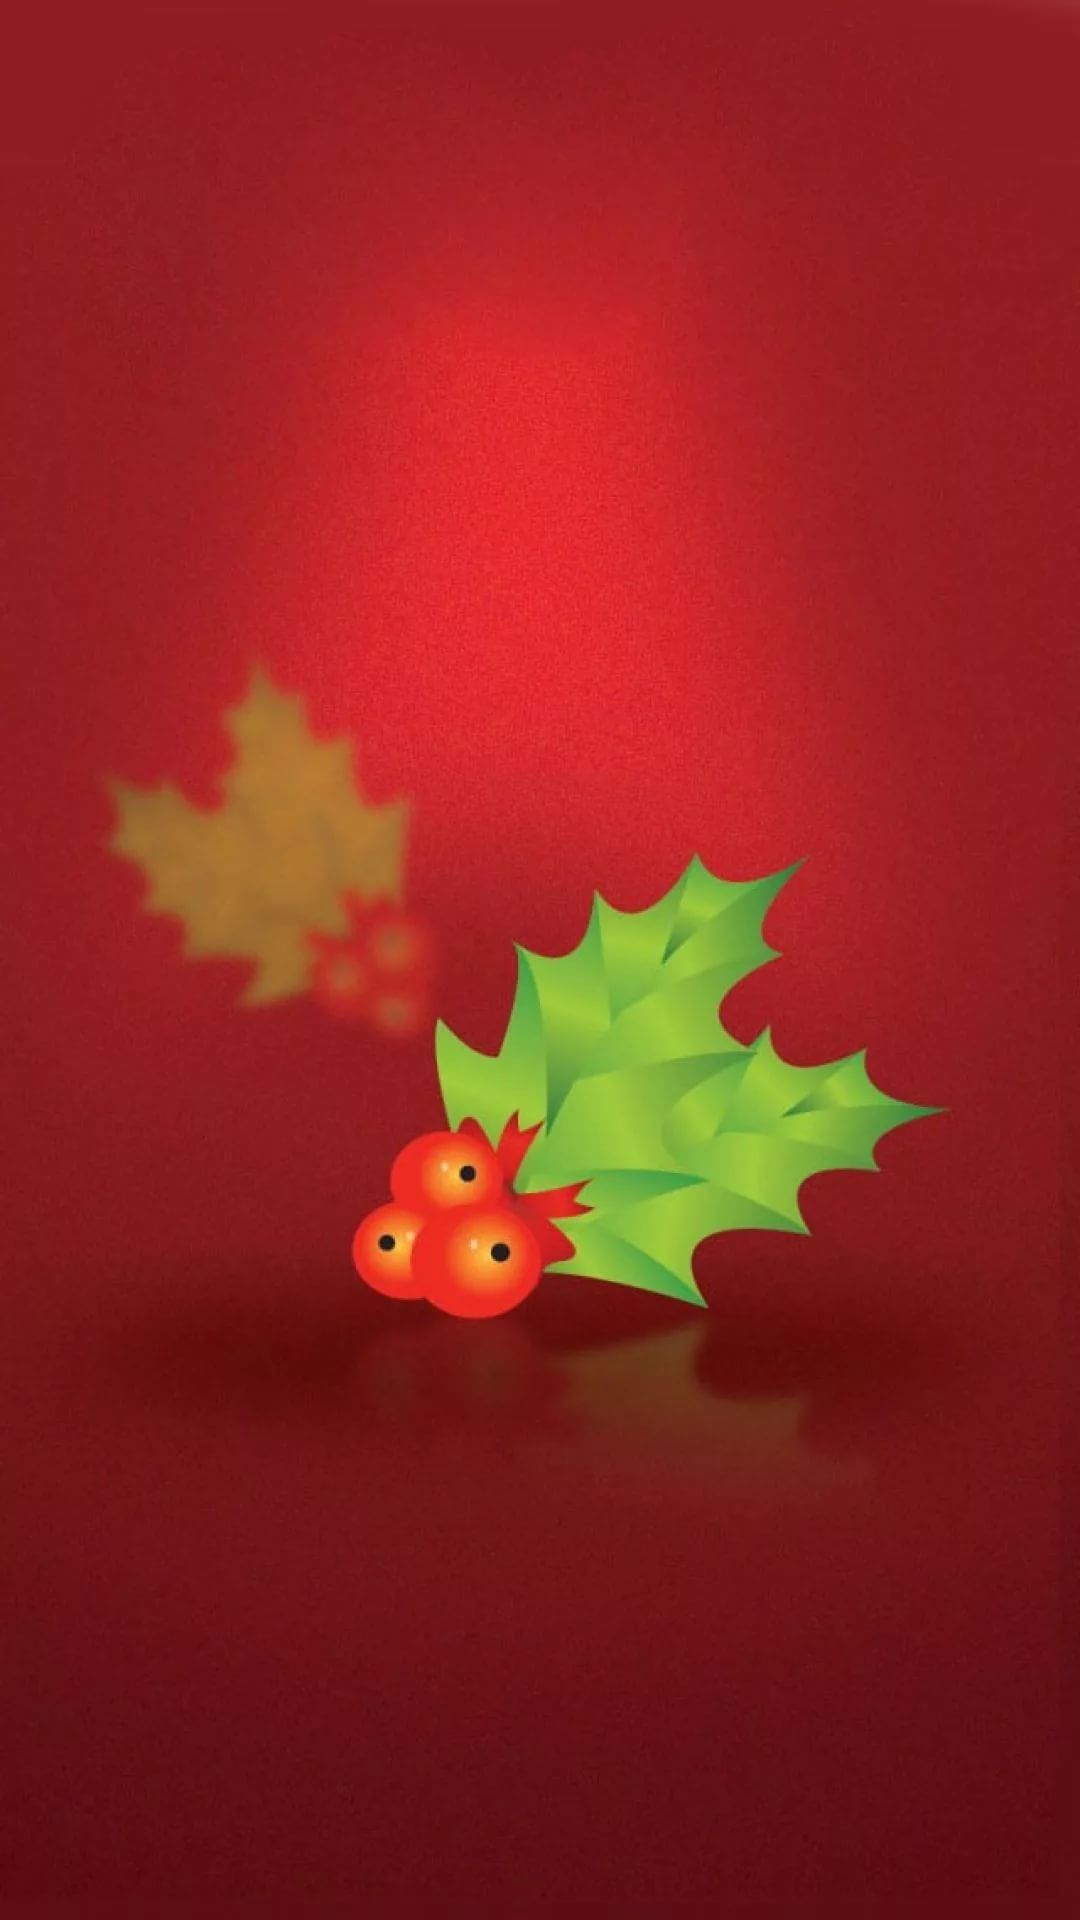 Free Christmas iPhone wallpaper